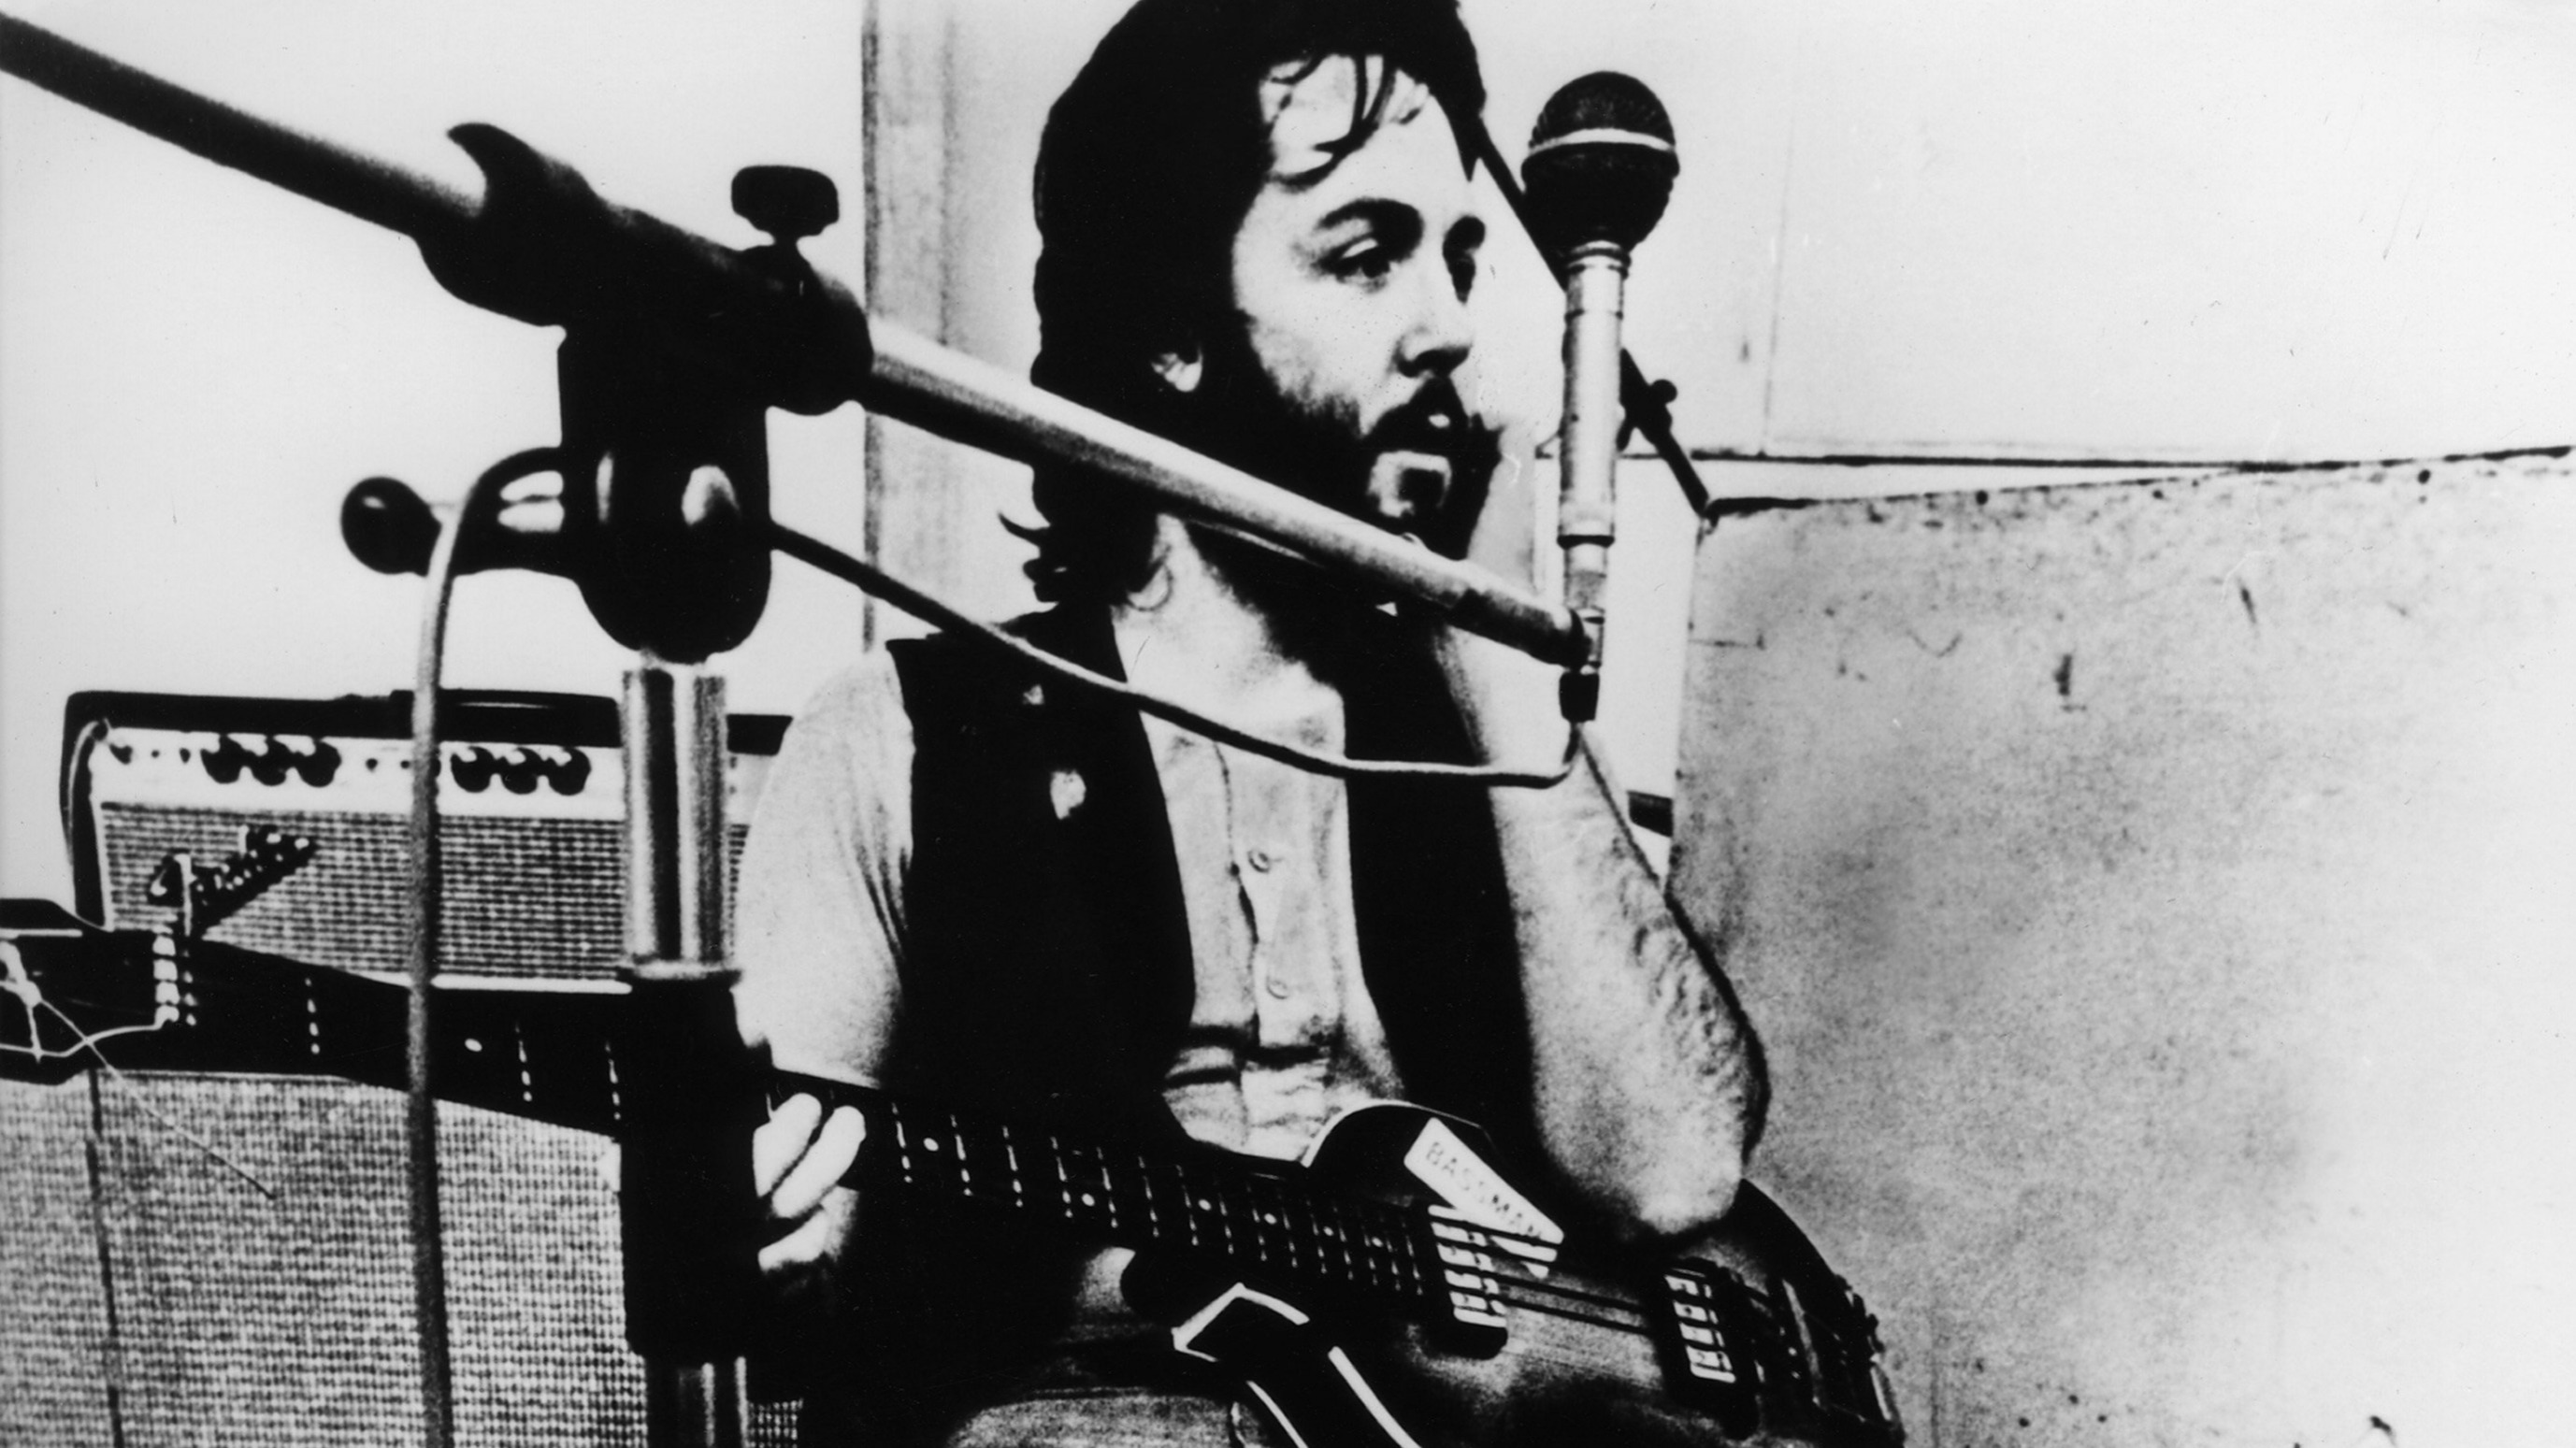 Helter Skelter — The Beatles' brutal song that inspired a murder spree